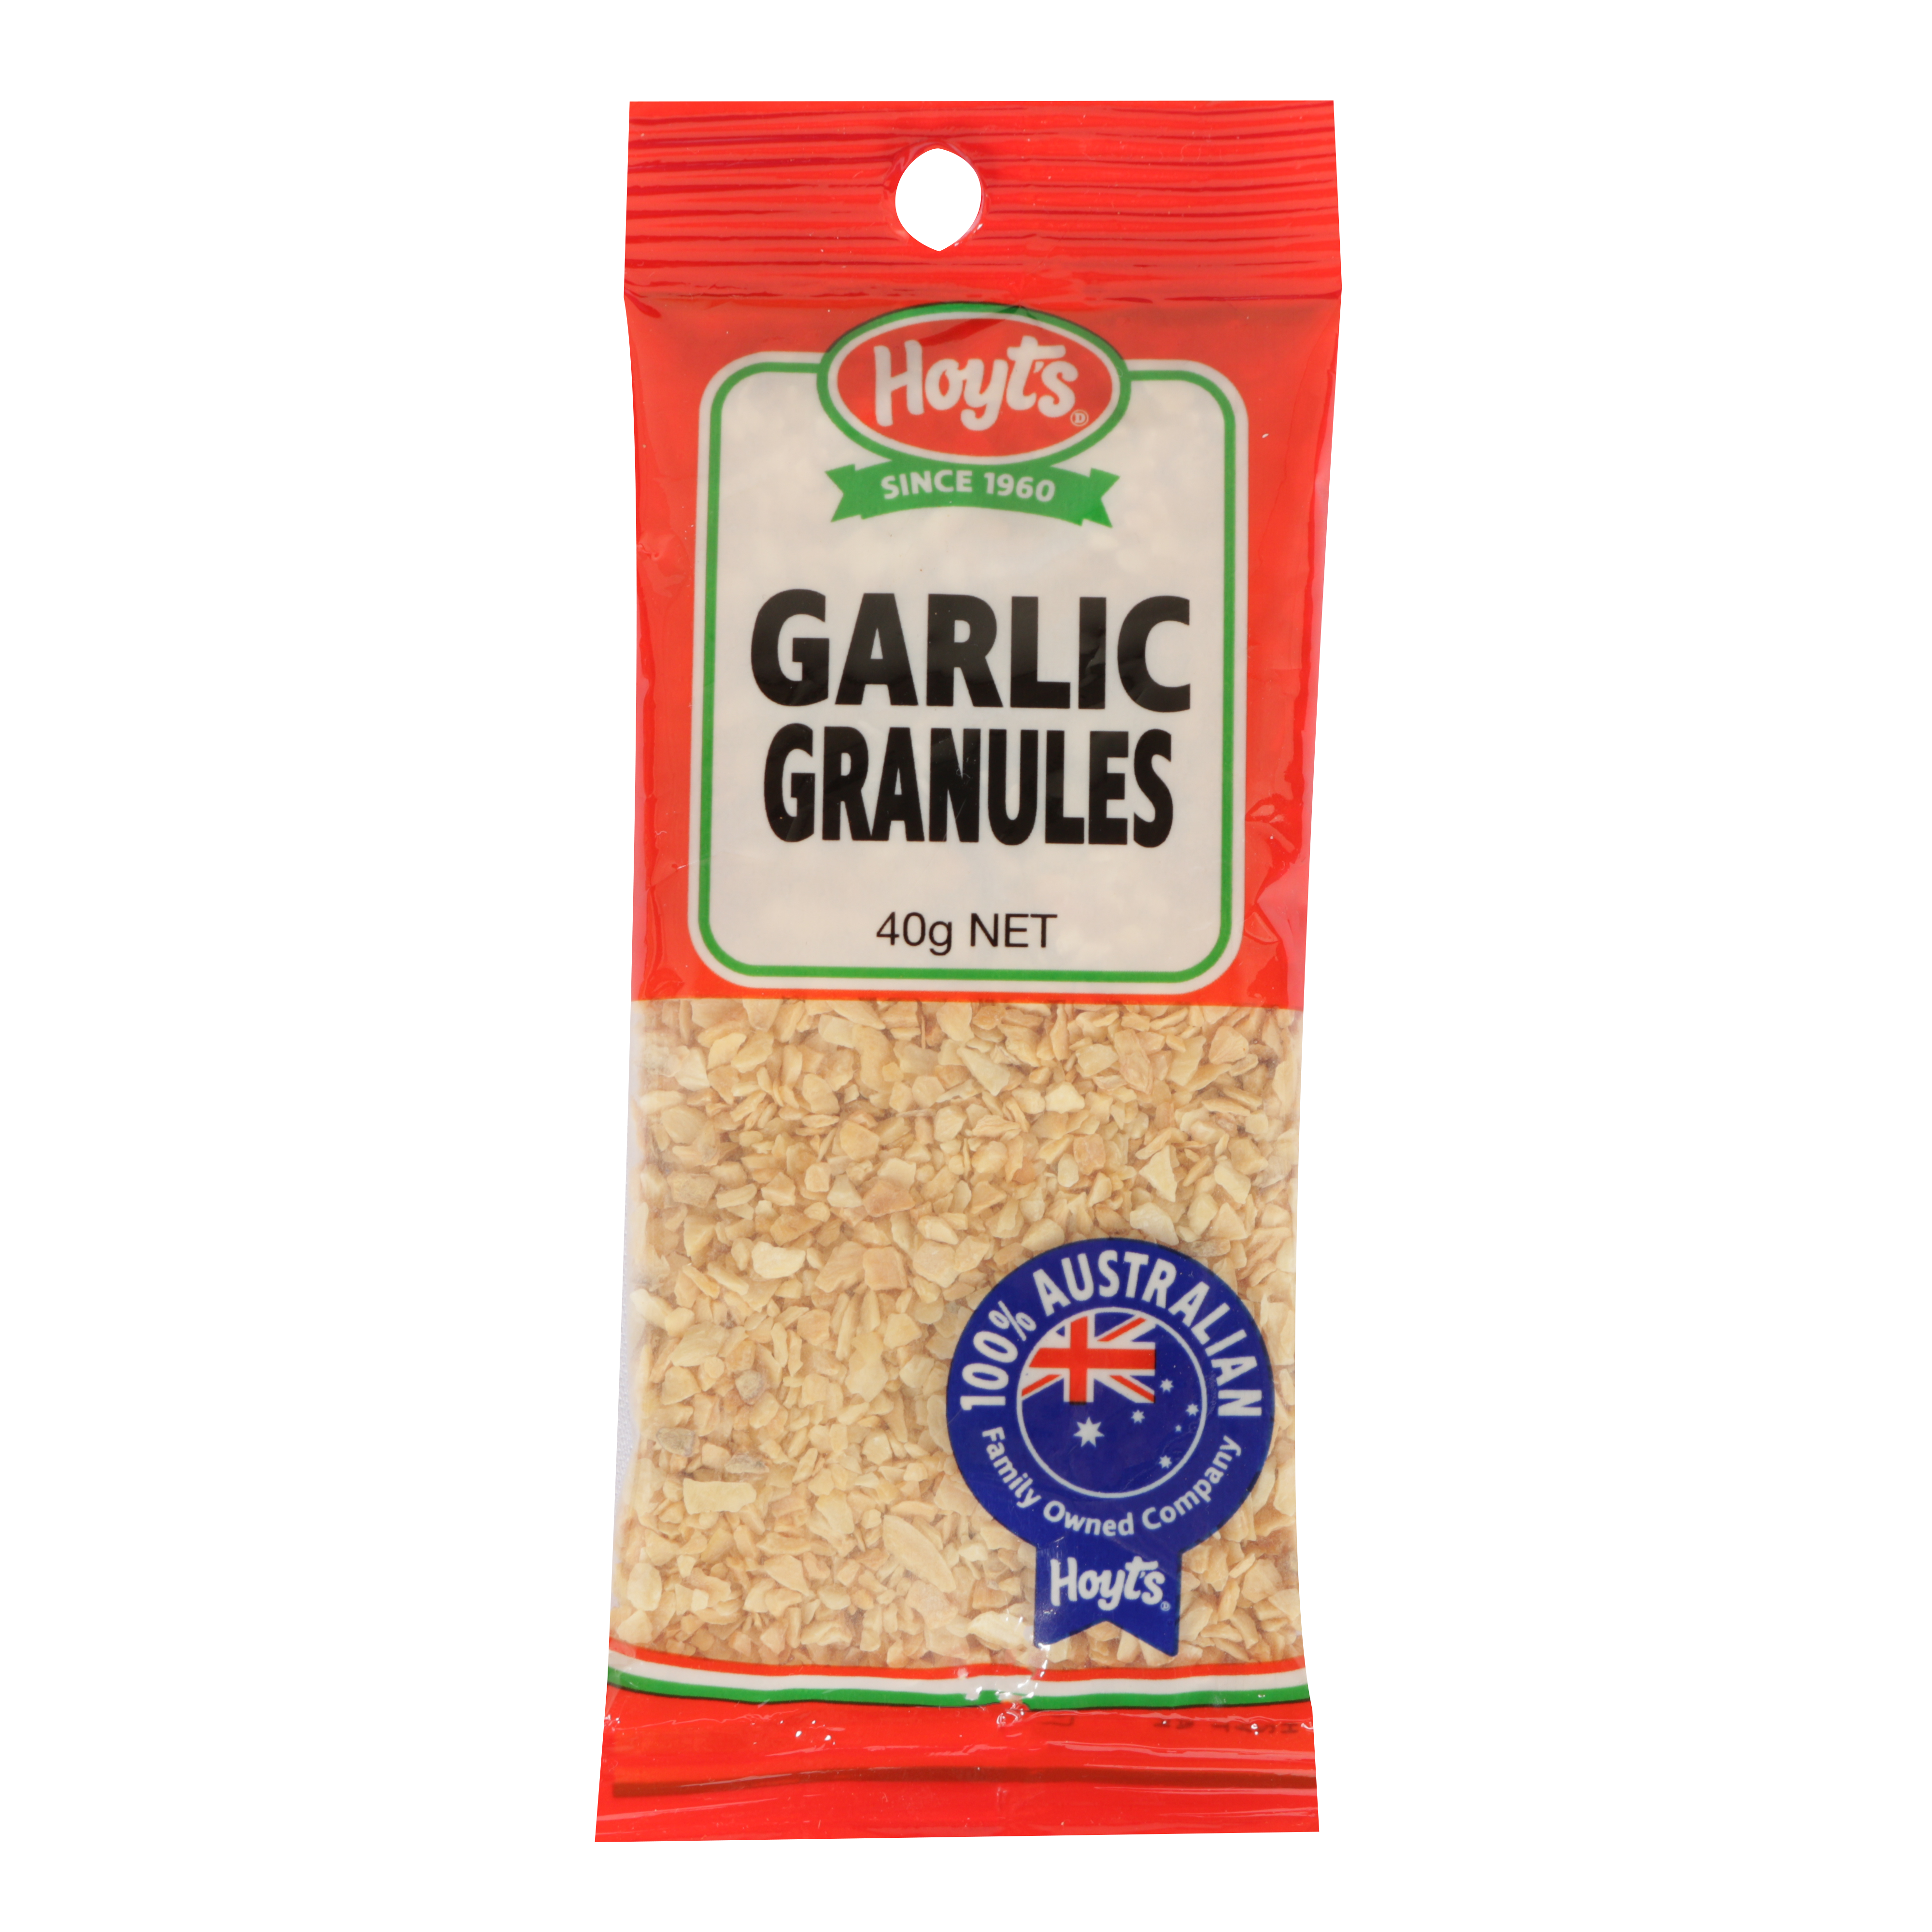 Hoyts Garlic Granules 40g